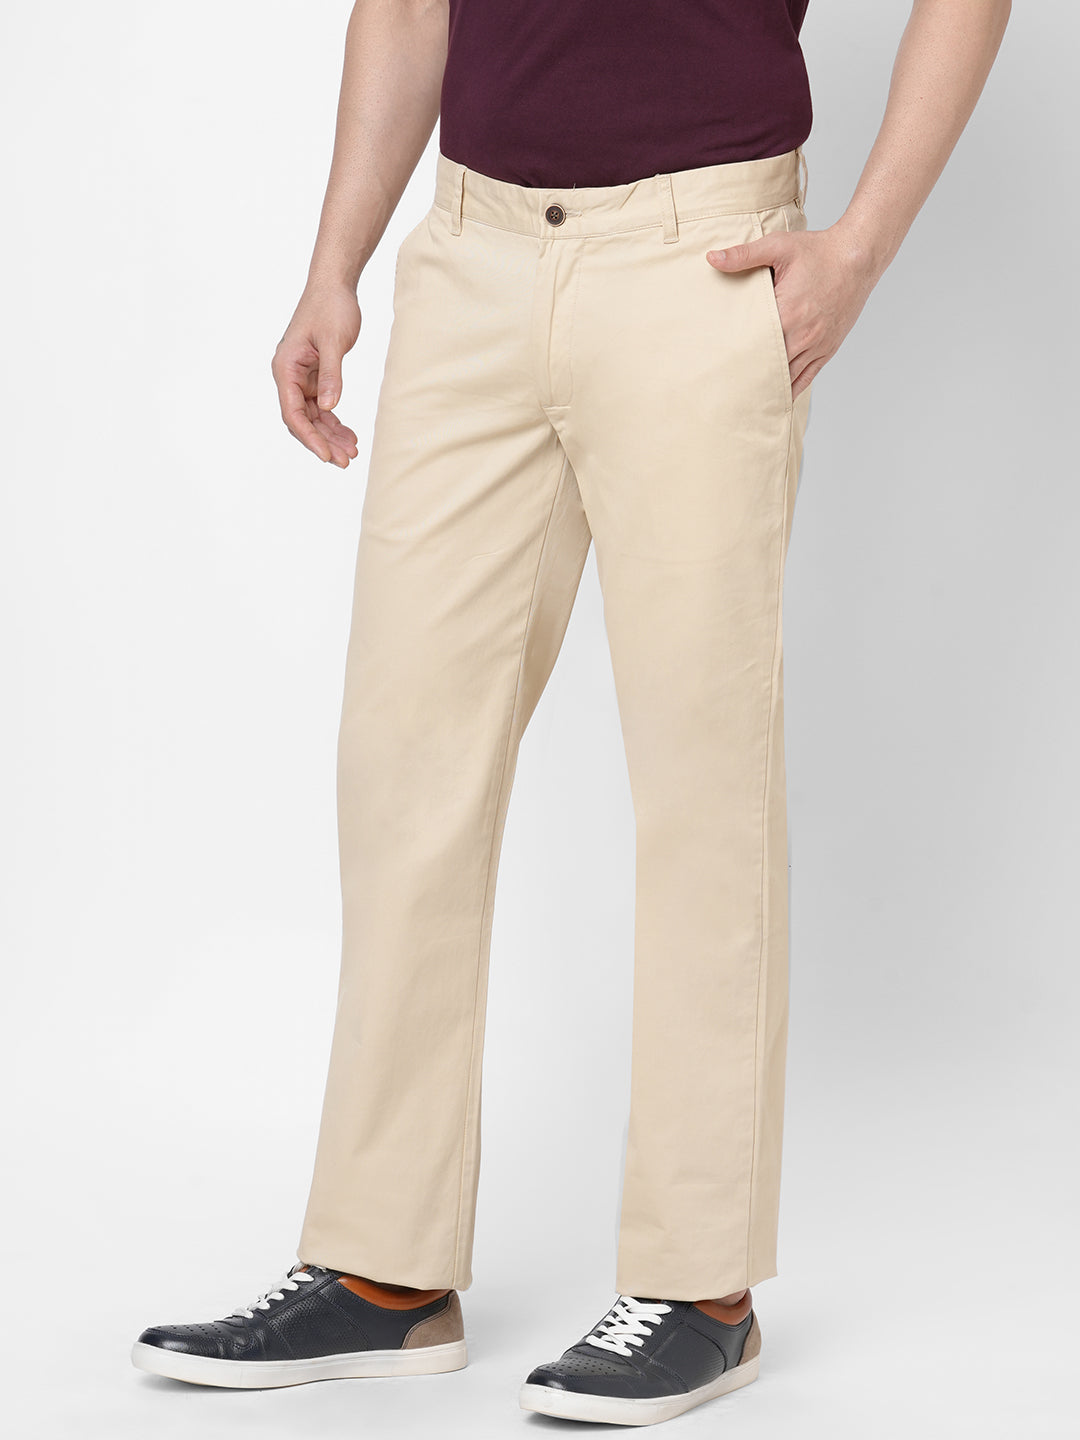 Formal Wear Mens Regular Fit Cotton Trouser